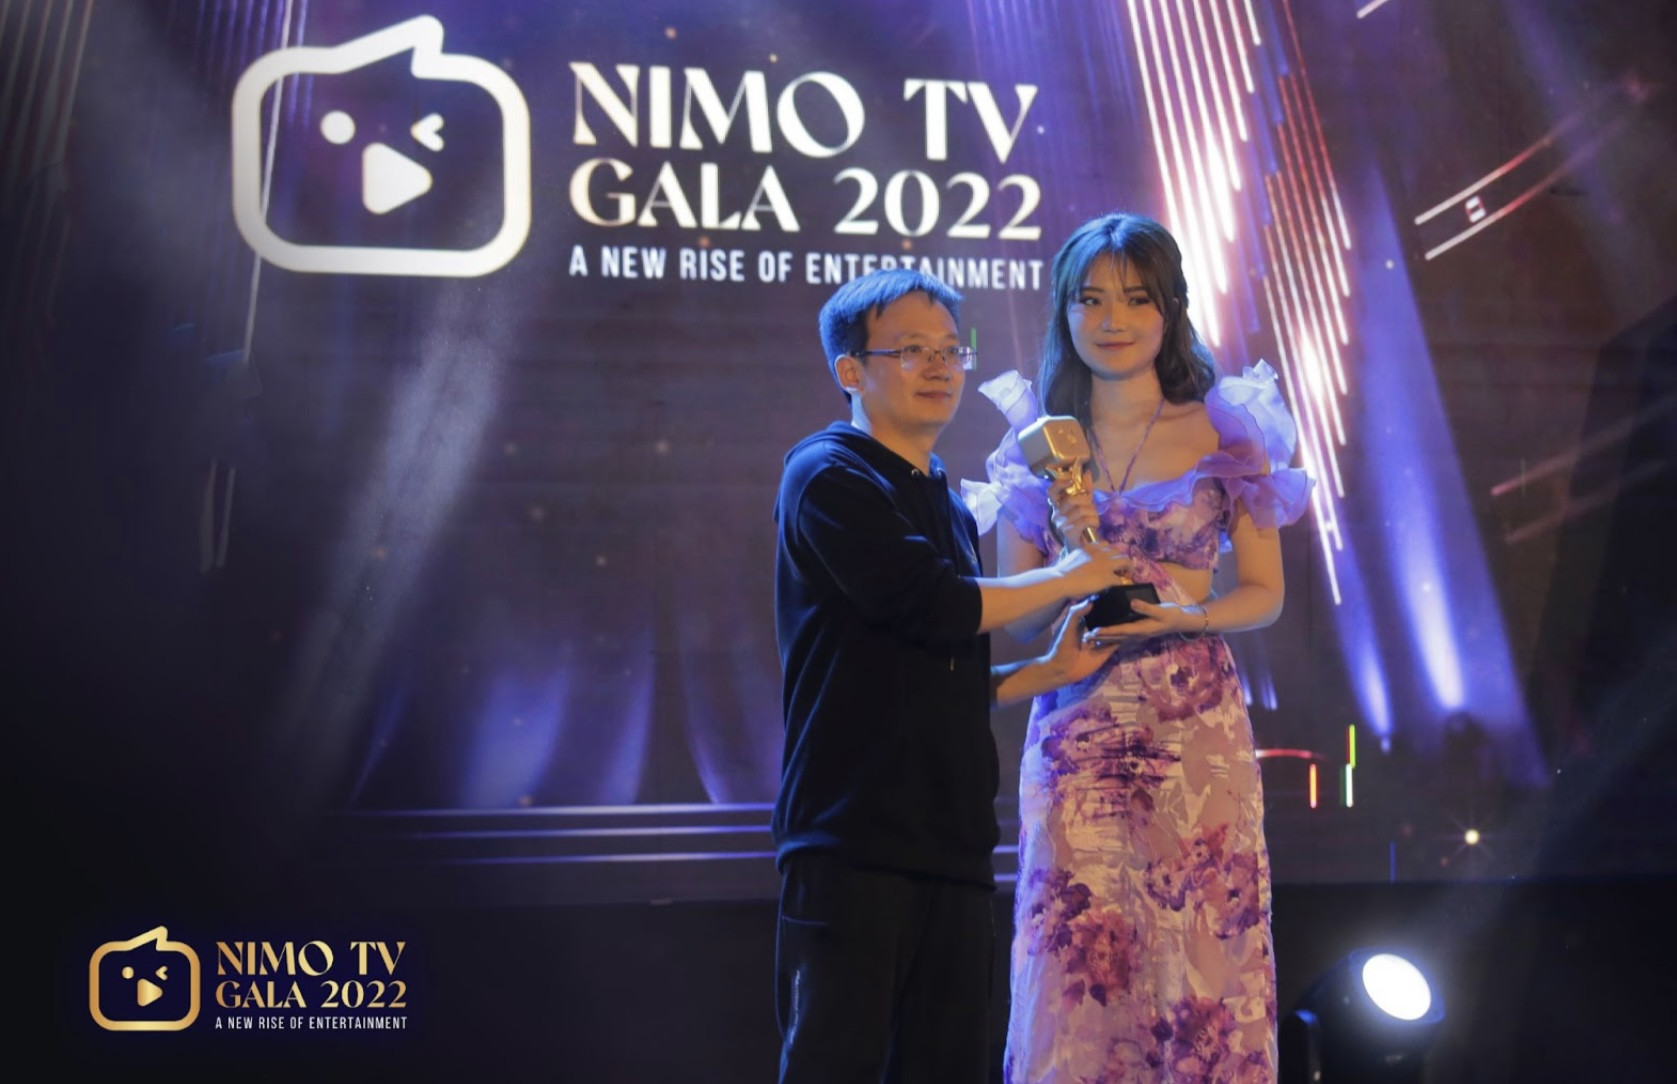 Di Nimo TV Gala 2022, Nimo TV ganjar penghargaan kepada talenta terbaik